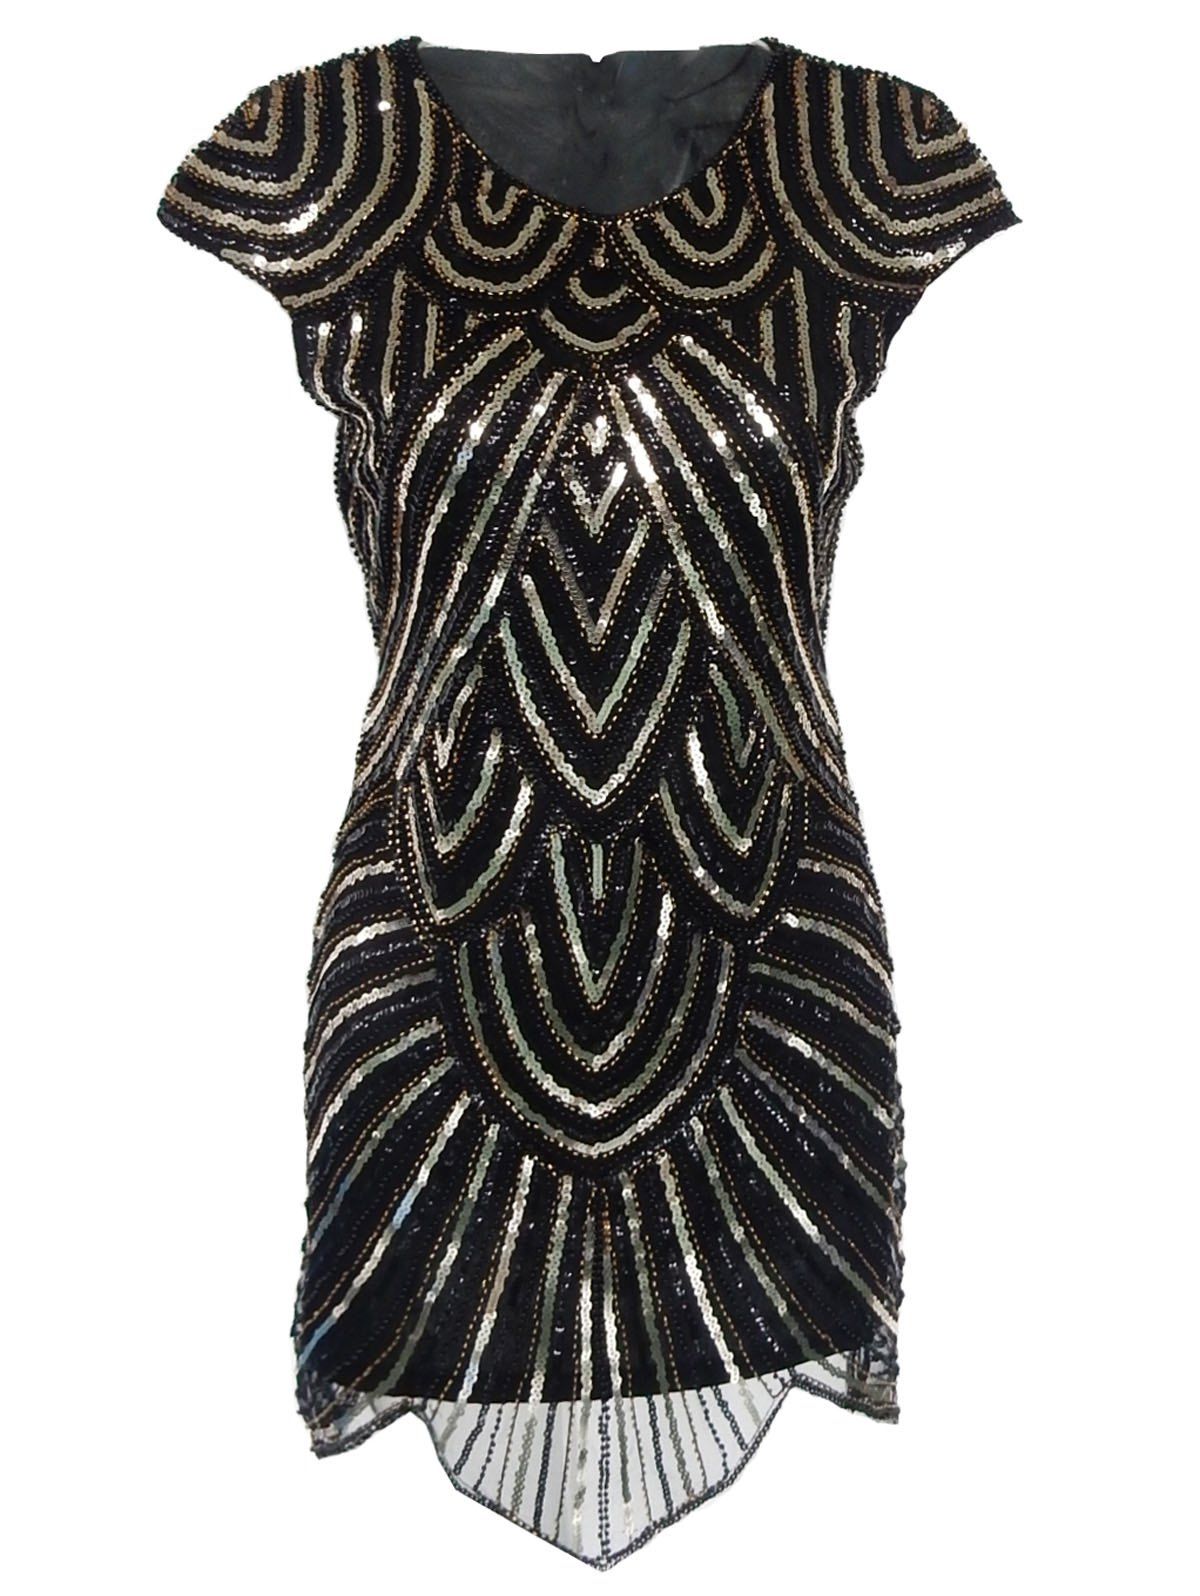 Gergeous Round Neck Sleeveless Striped Sequins Embellished Irregular Hem Club Dress For Women - BLACK S